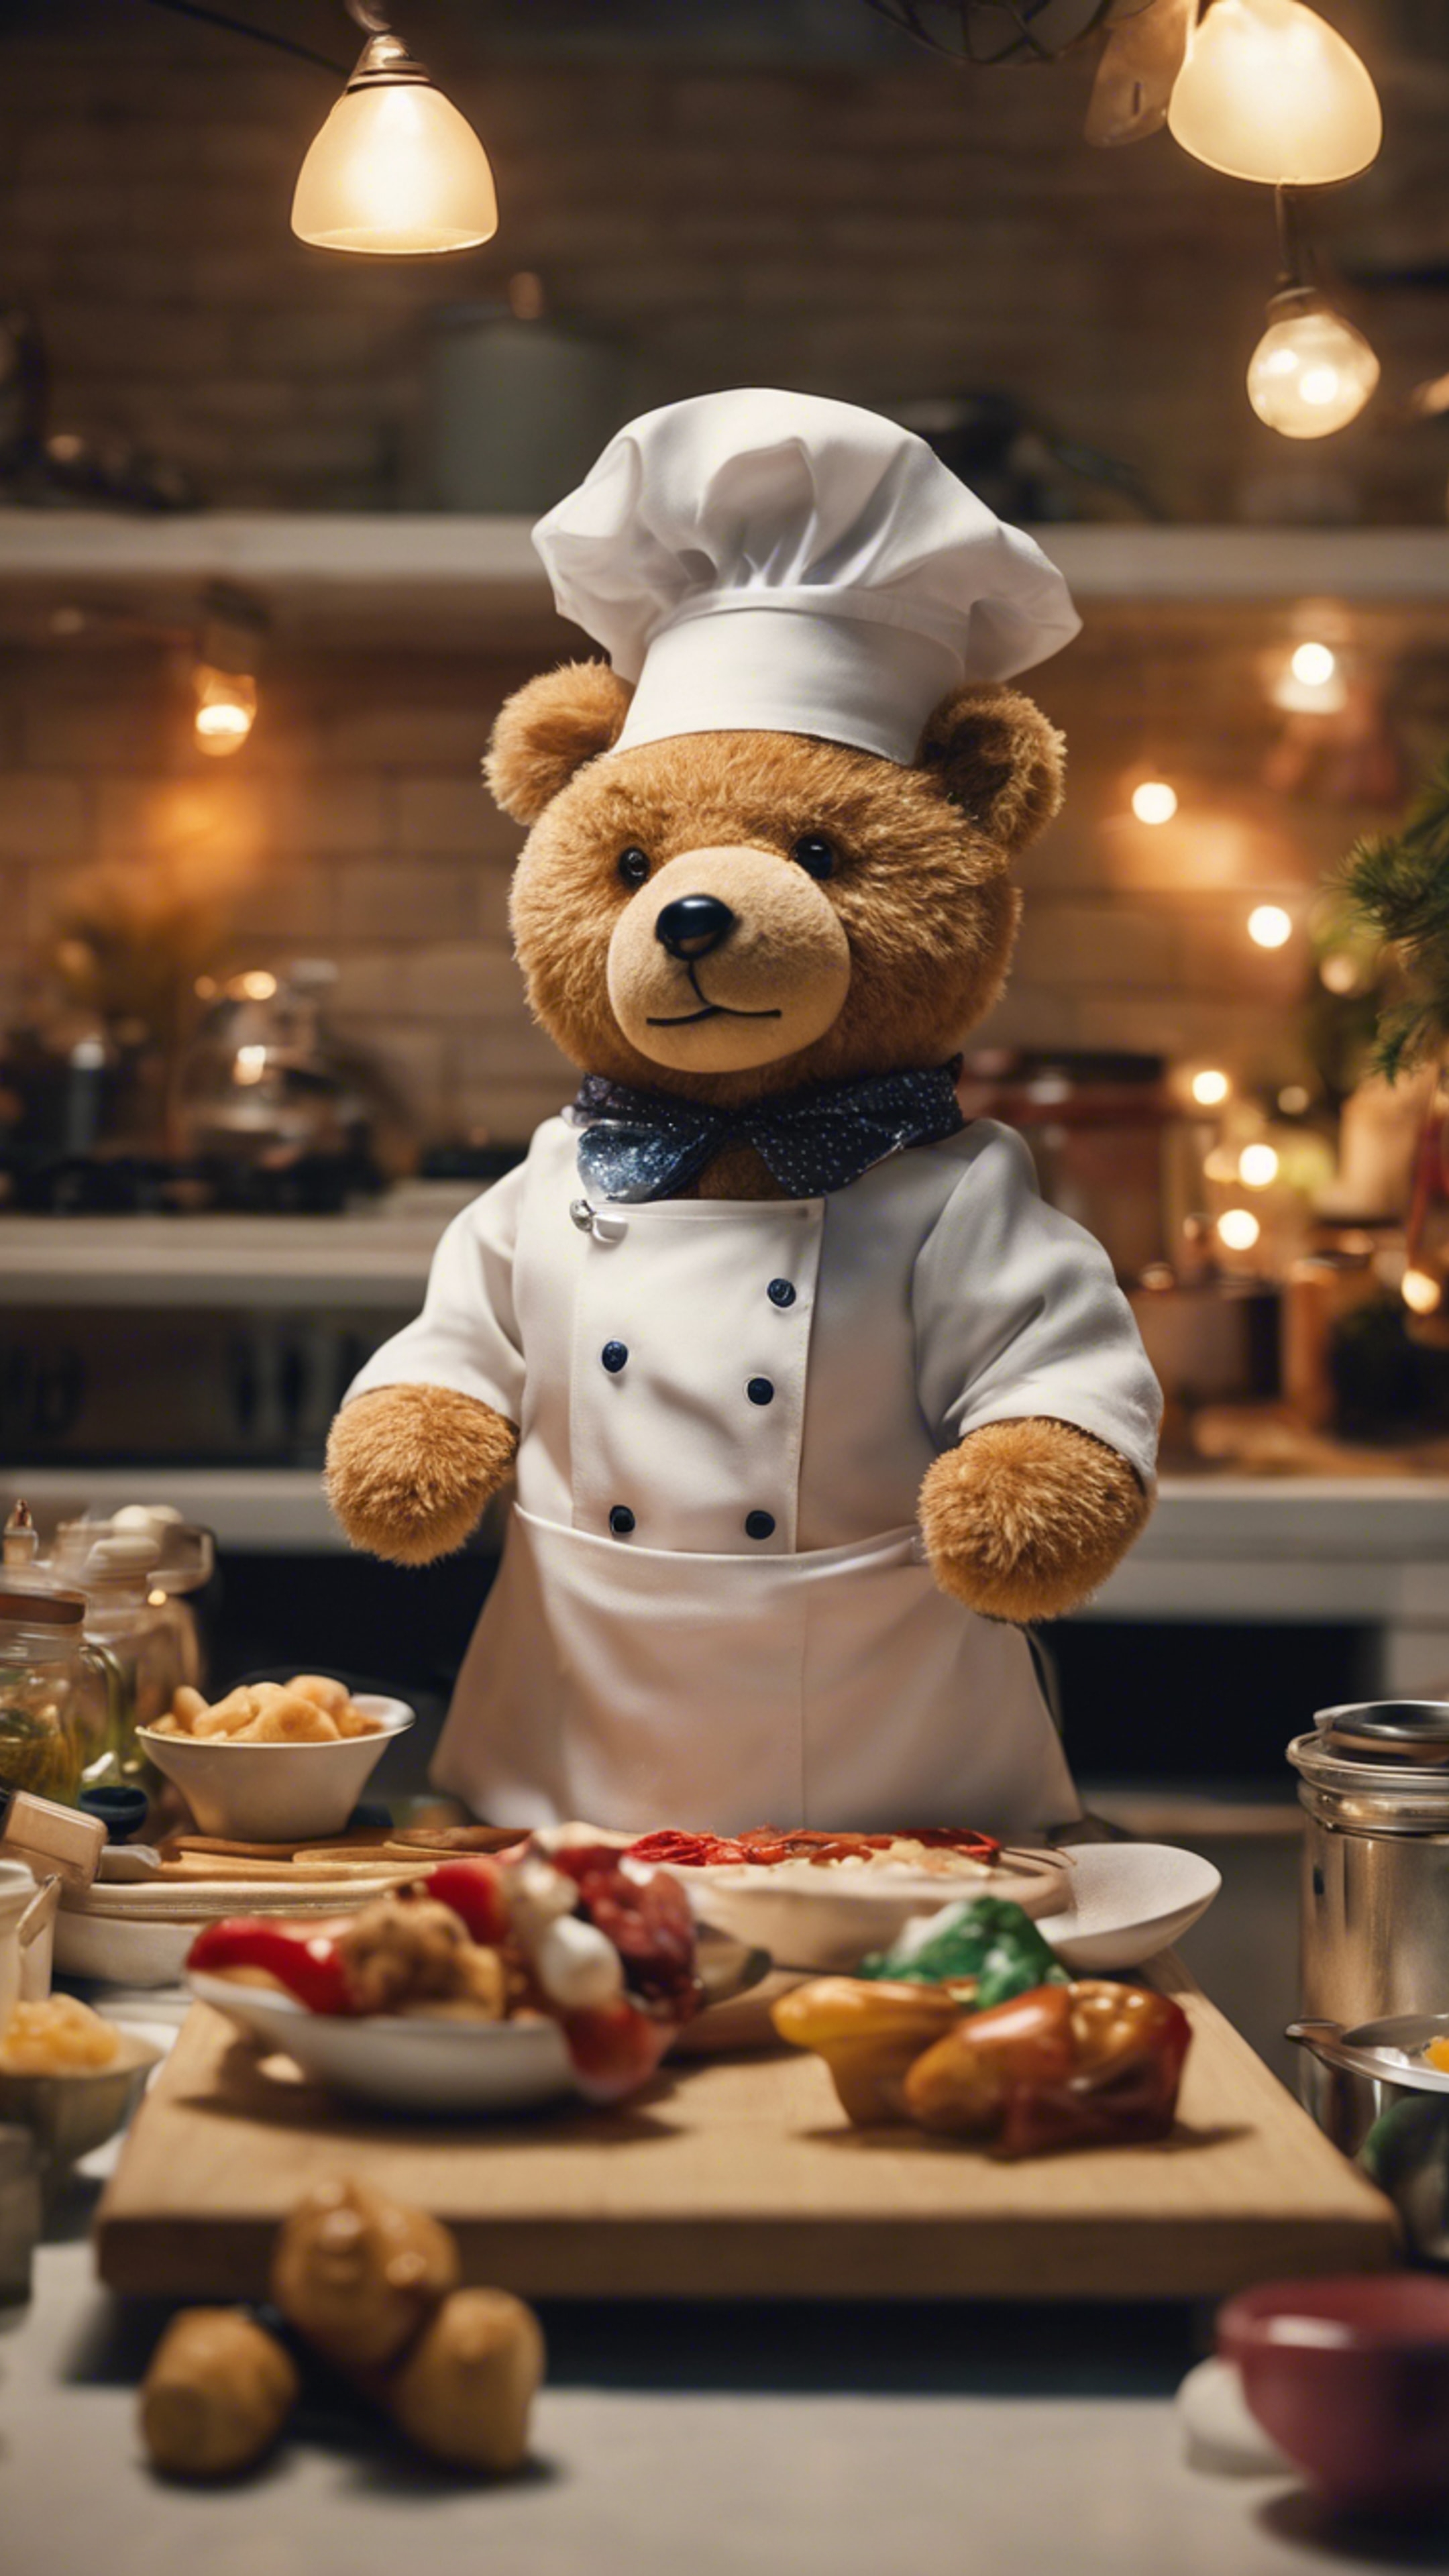 A teddy bear chef preparing a festive feast in a hustle and bustle toy kitchen scene.壁紙[490390473eaf4786af26]